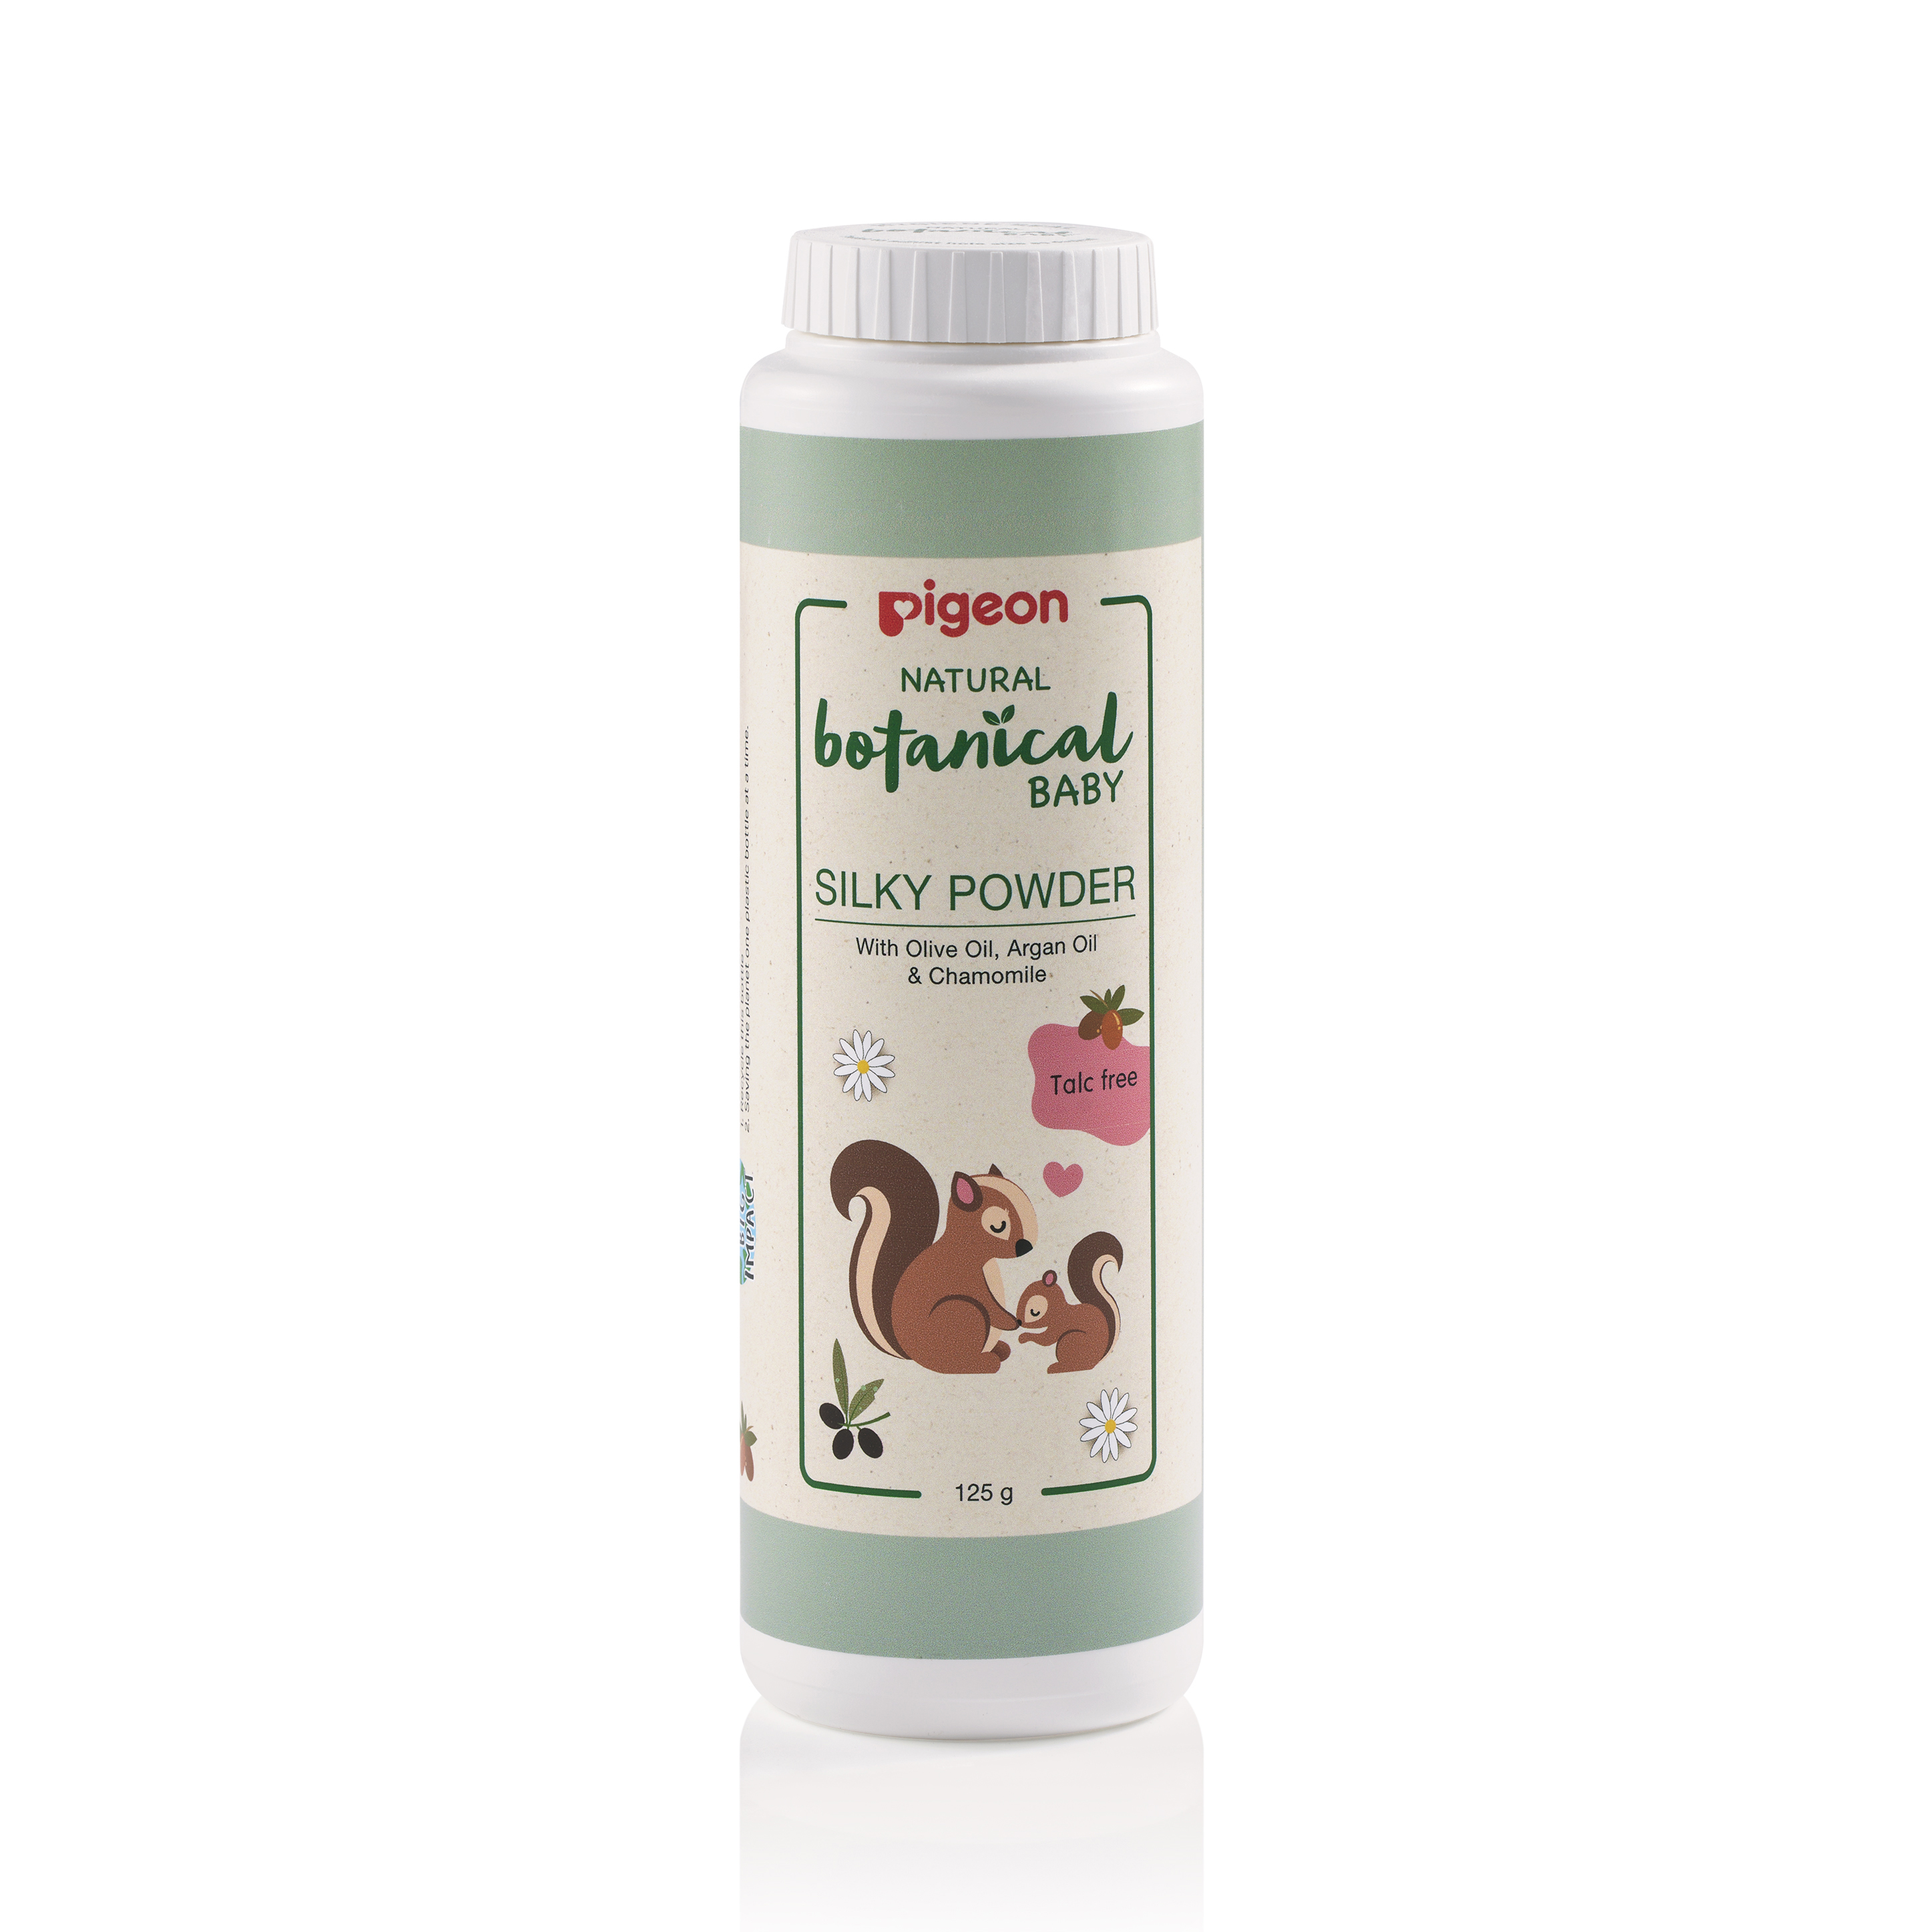 Pigeon Natural Botanical Baby Silky Powder 125g (PG-78415)